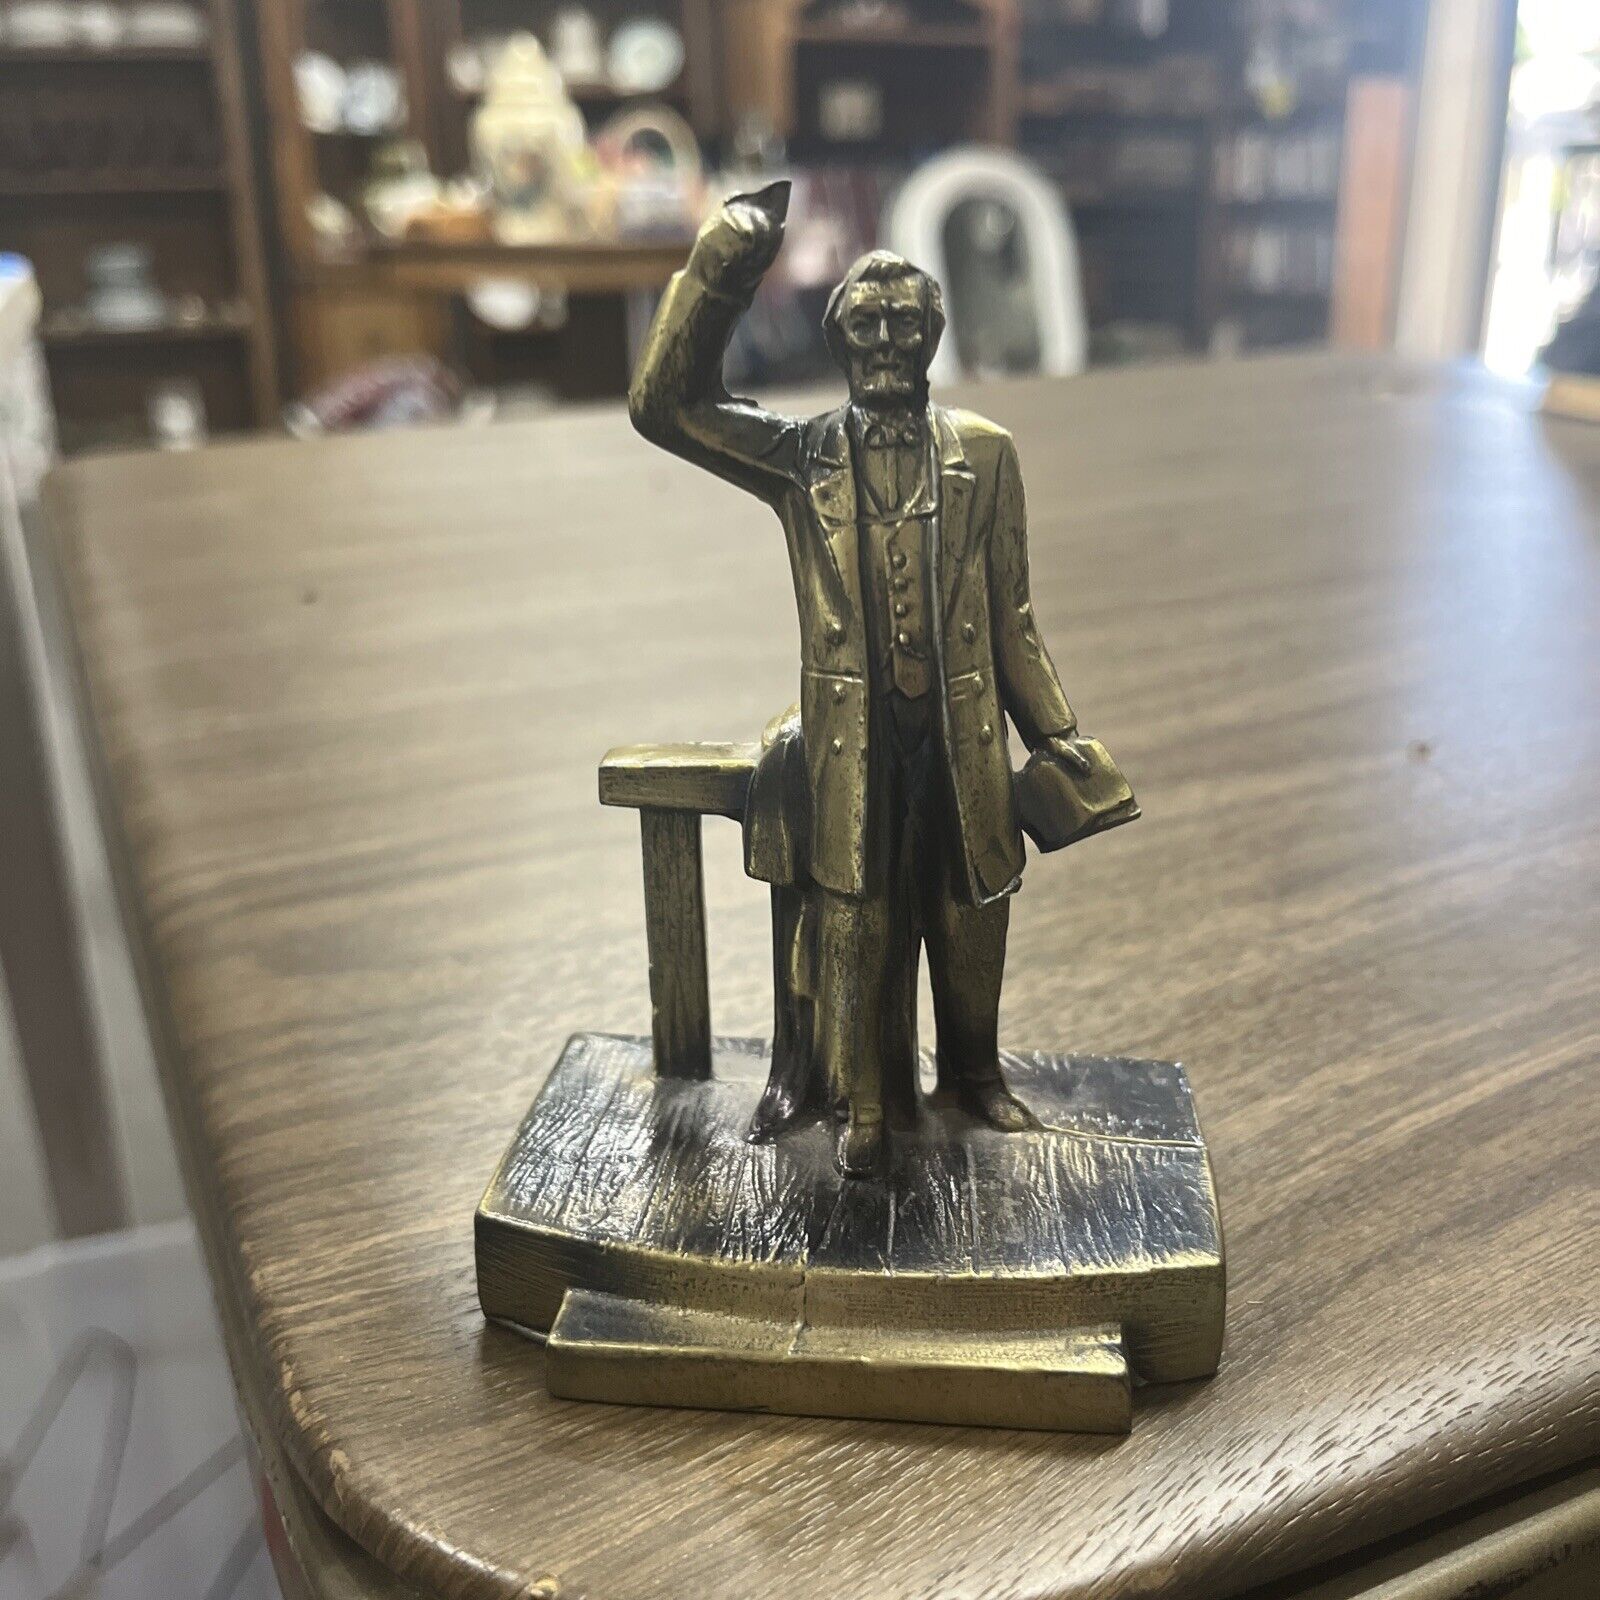 Vintage Abraham Lincoln figurine